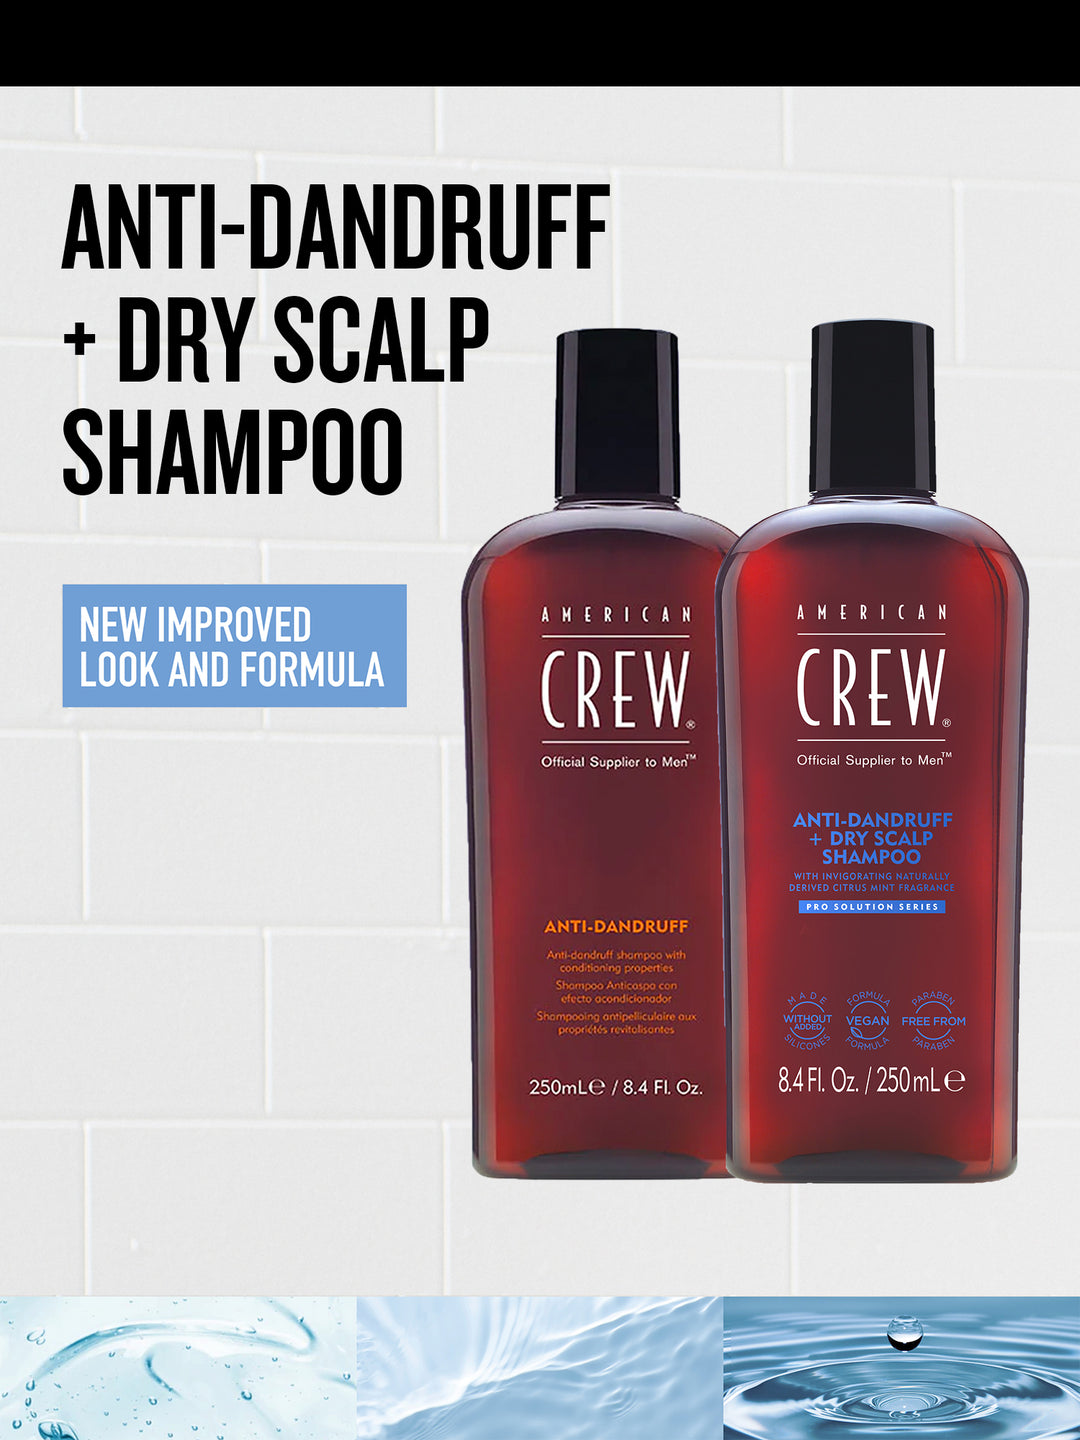 Anti-Dandruff + Dry Scalp Shampoo- New improved look and formula